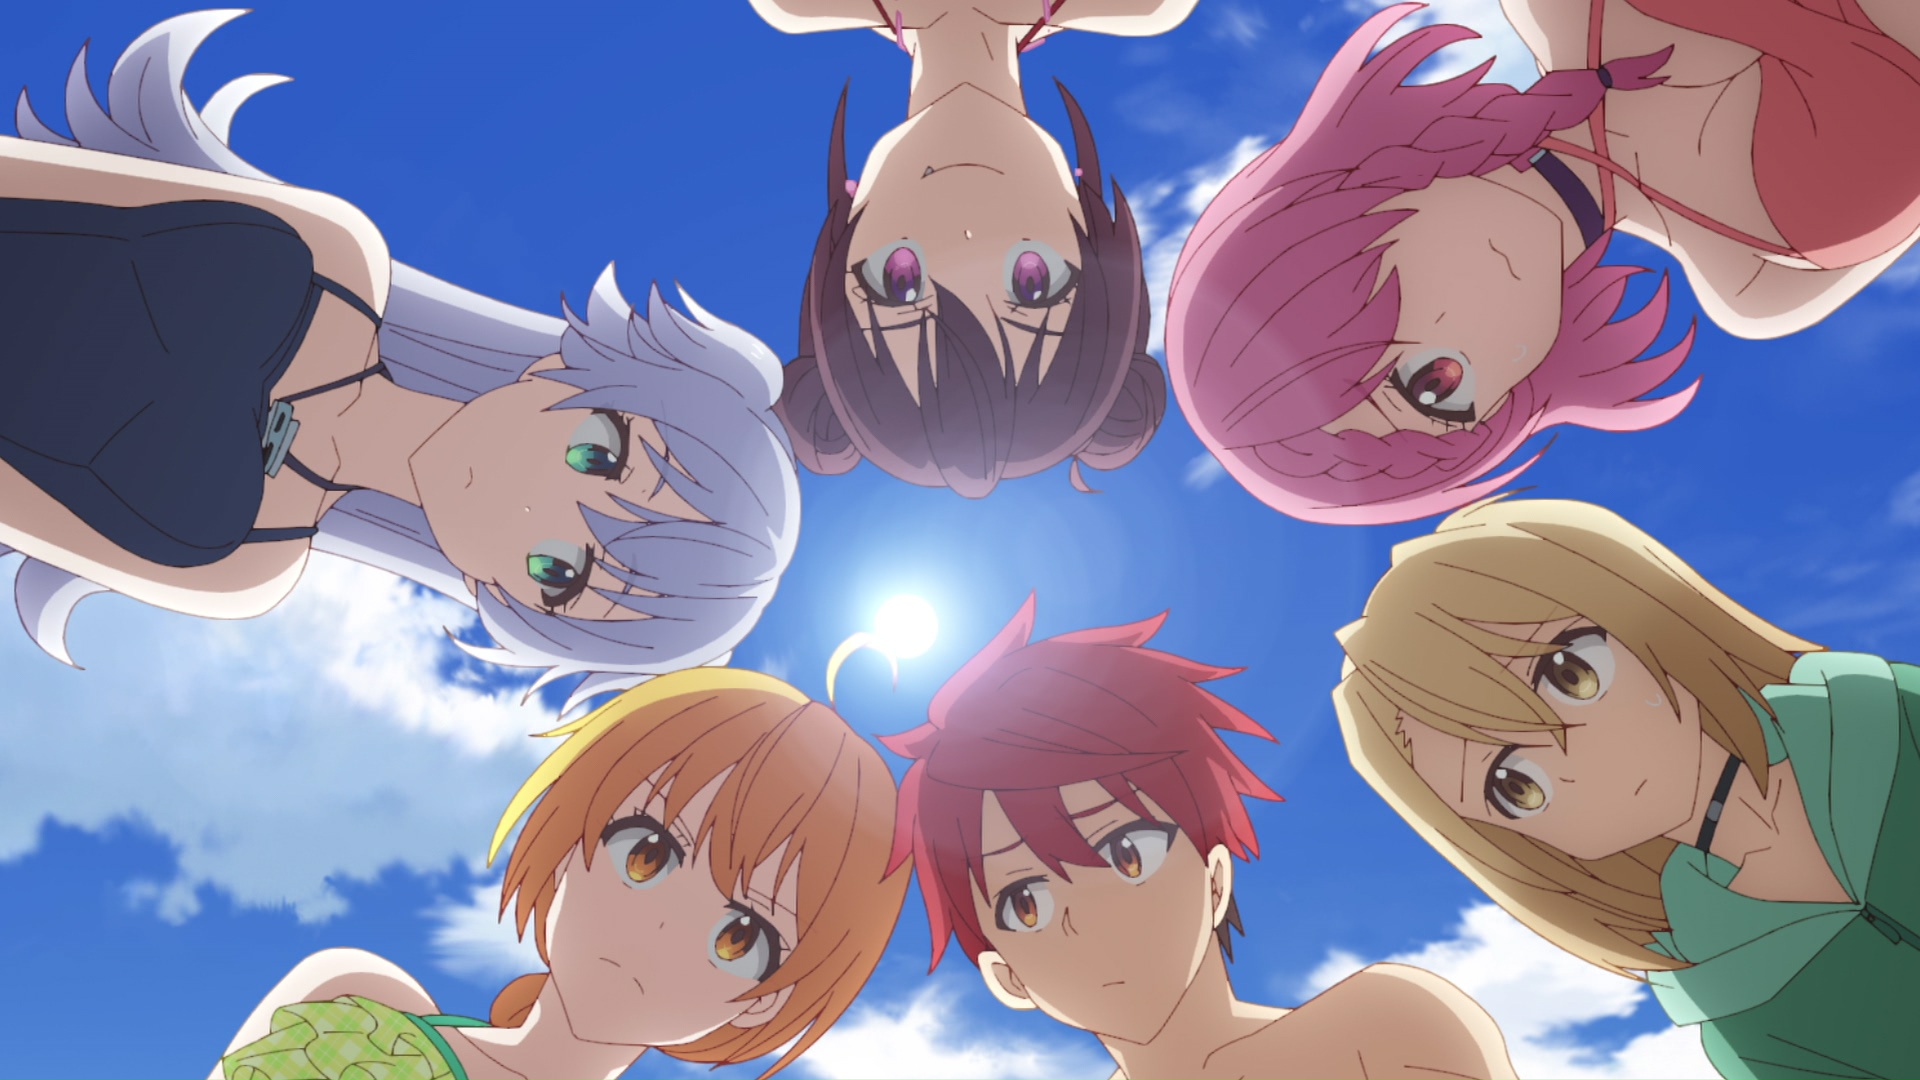 Watch Super Hxeros Season 1 Episode 9 Sub And Dub Anime Simulcast Funimation